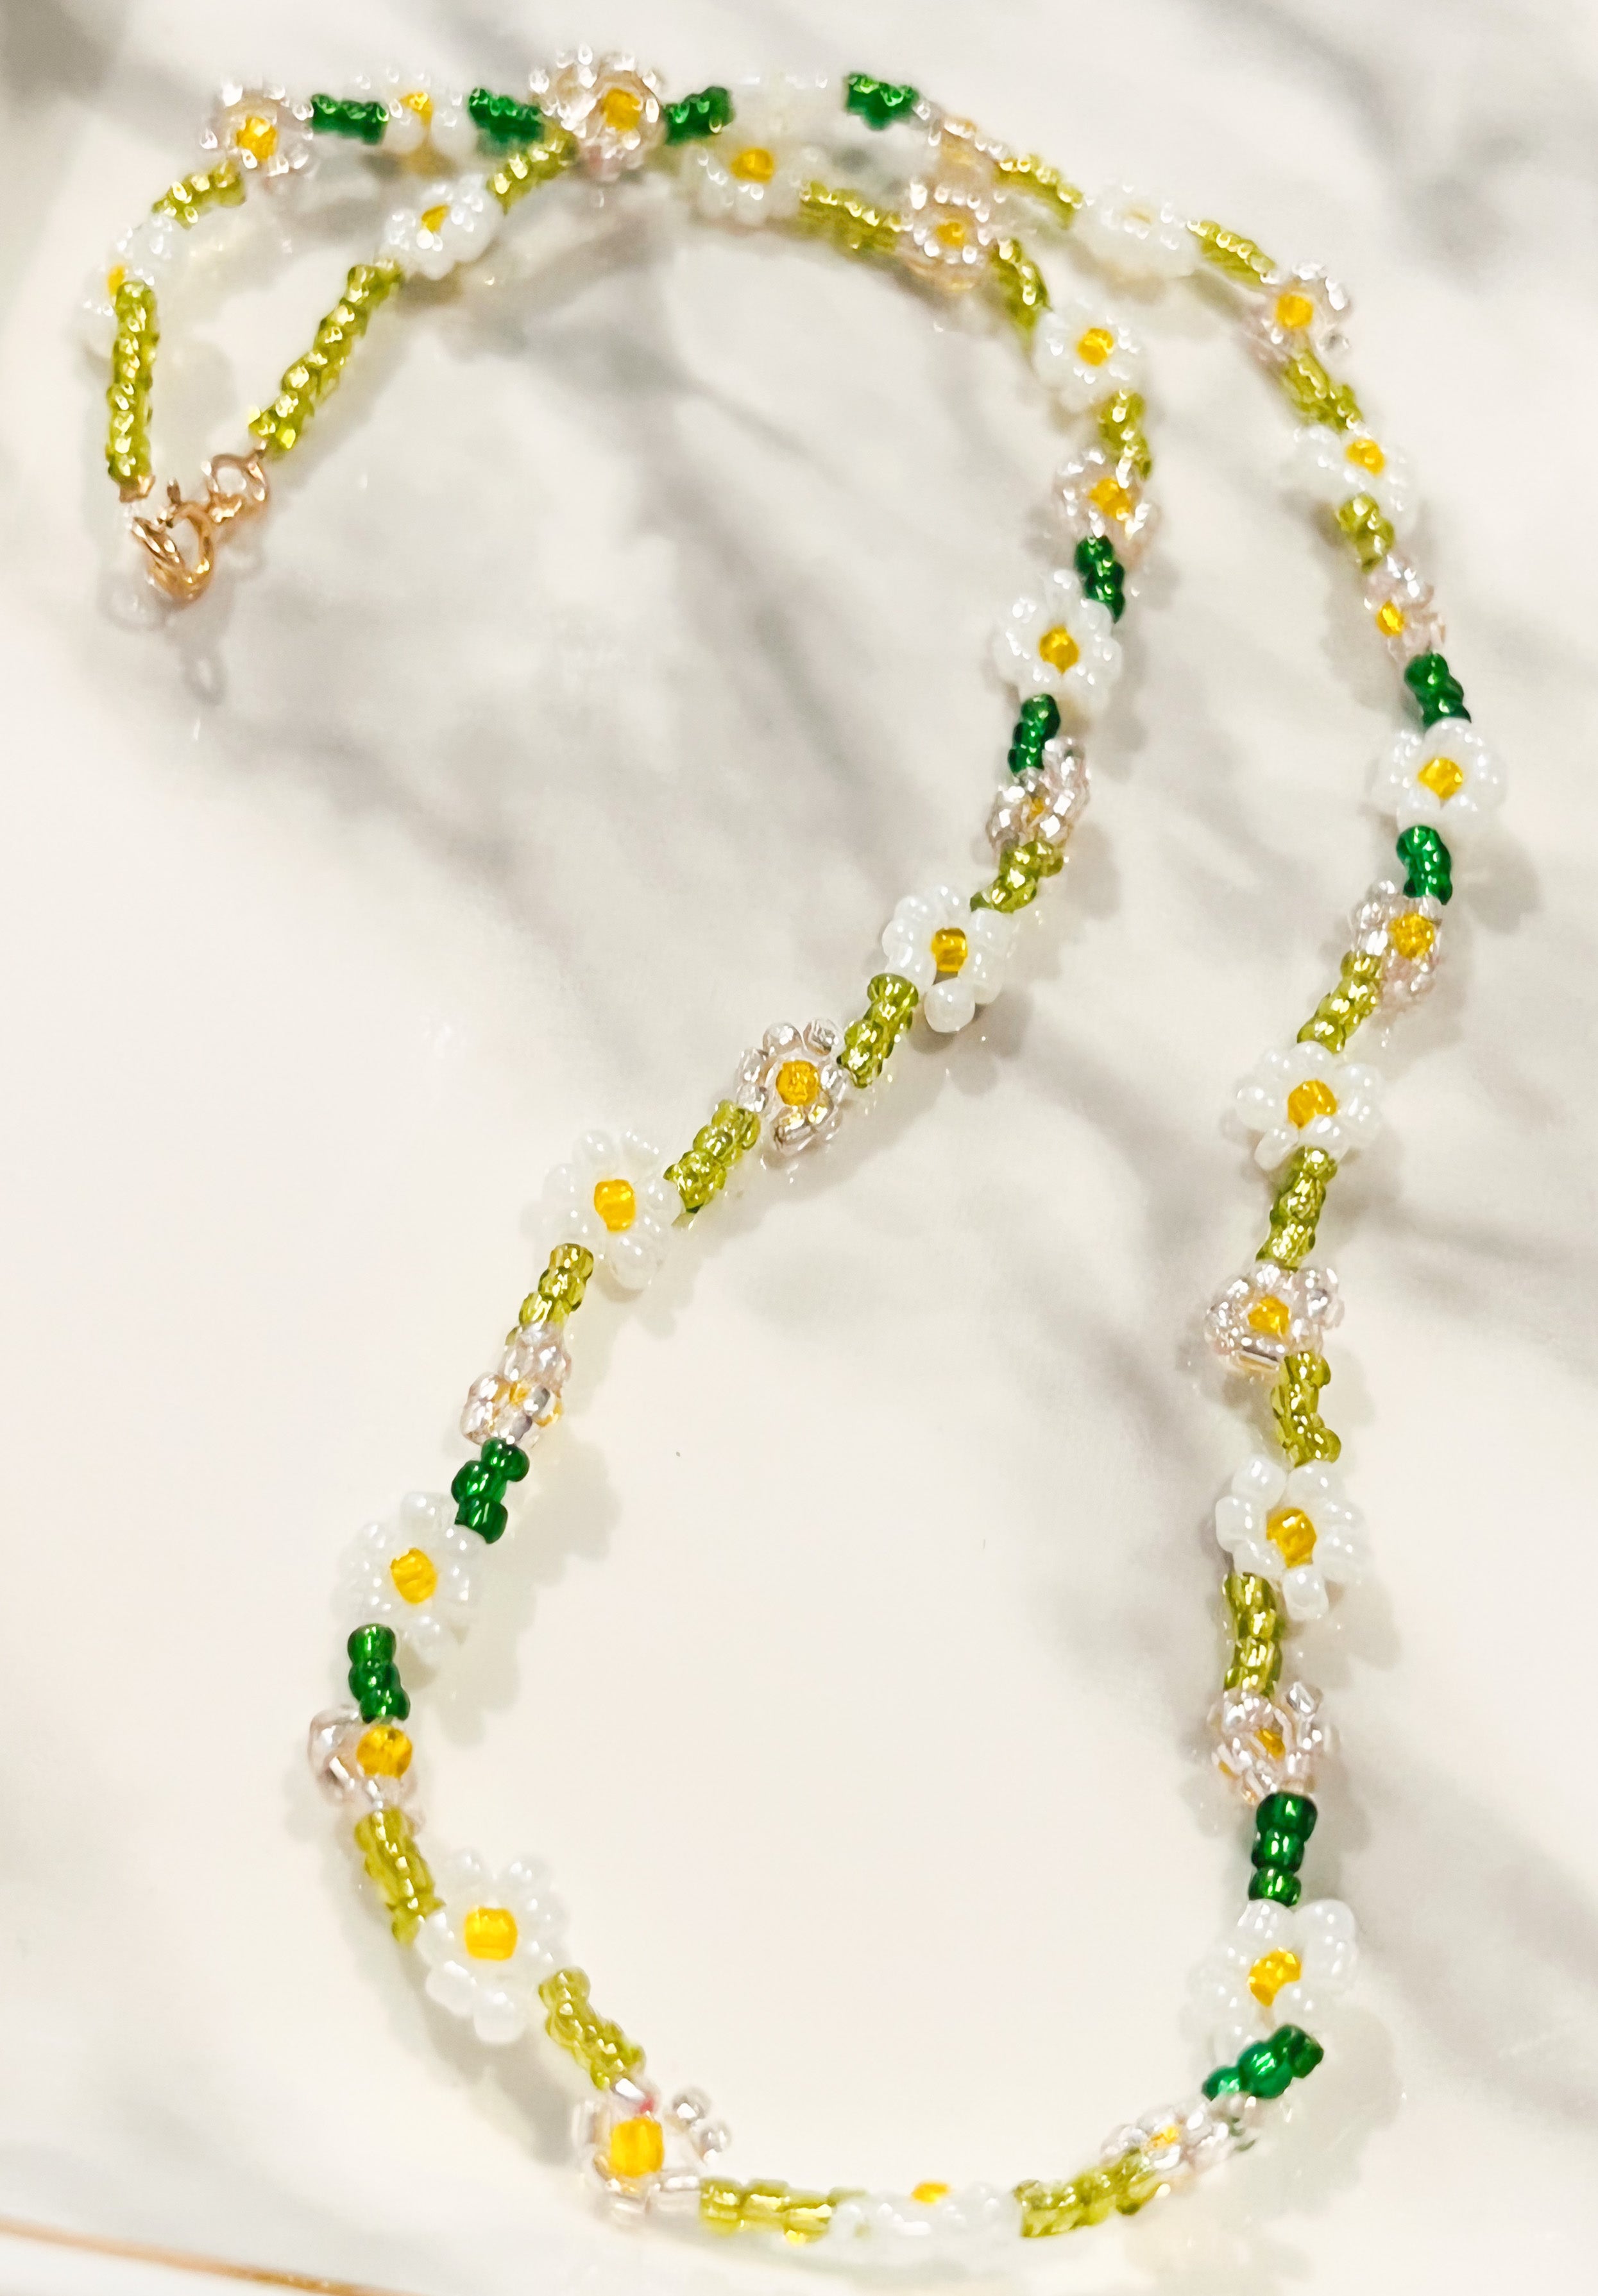 Daisy chain beaded necklace, Flower seed bead choker, Trendy aesthetic  necklace | eBay